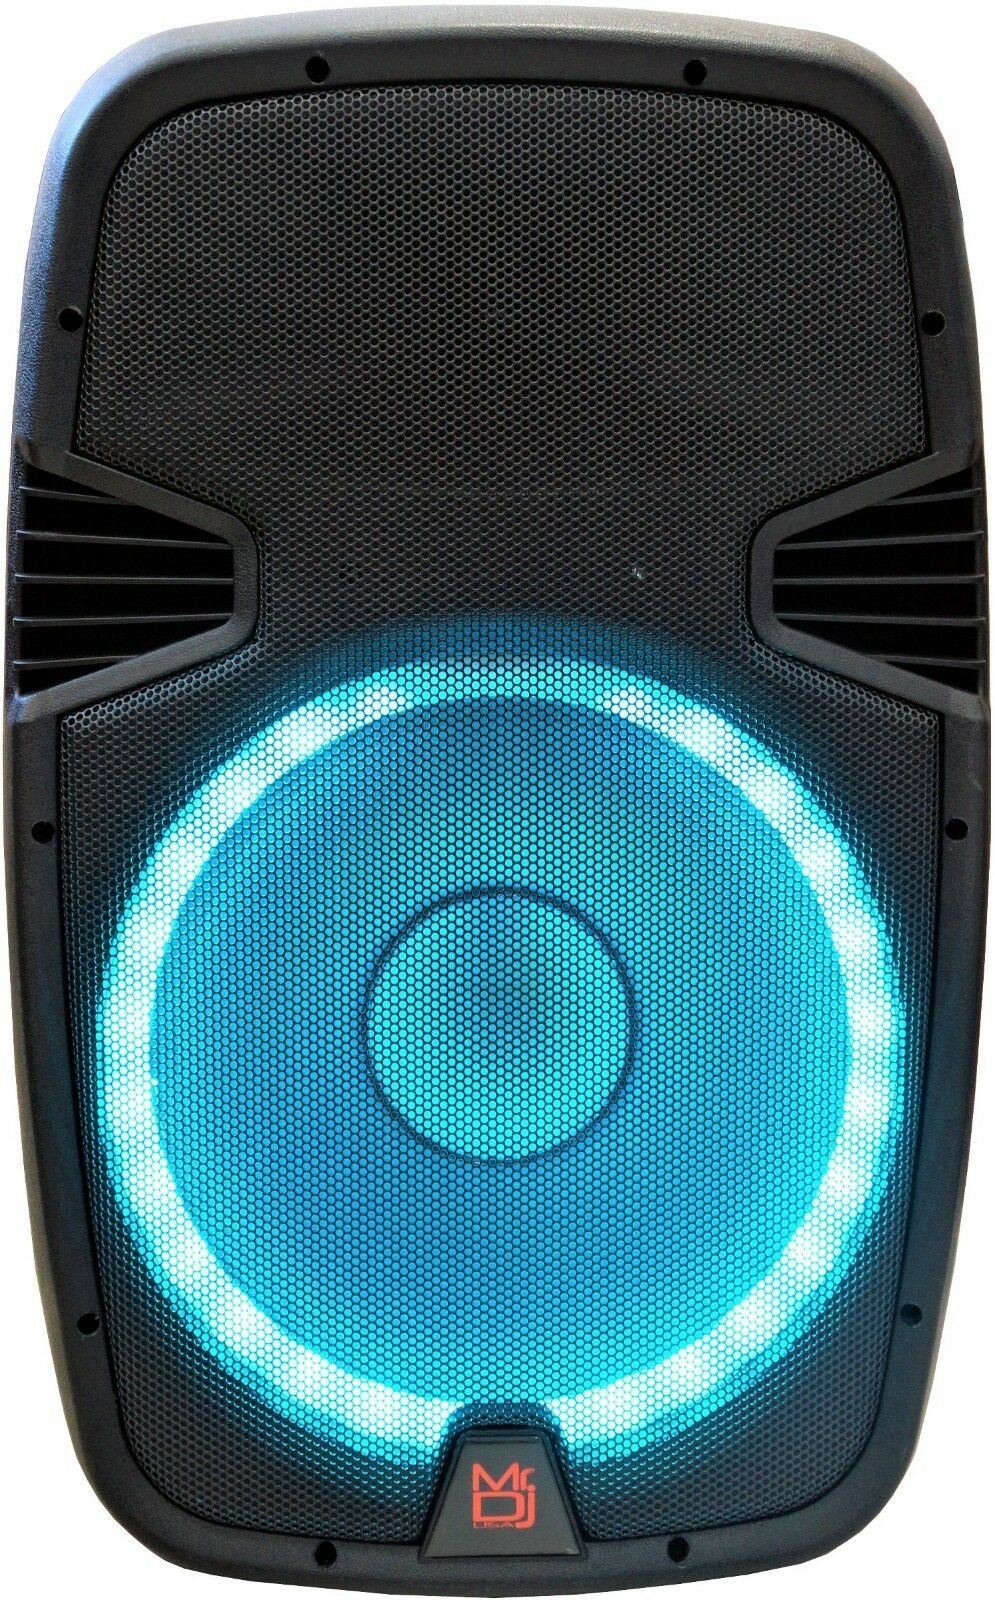 MR DJ PBX2690LB 15" 2-way Portable Speaker with LED Lighting, Built-in Bluetooth - image 3 of 3